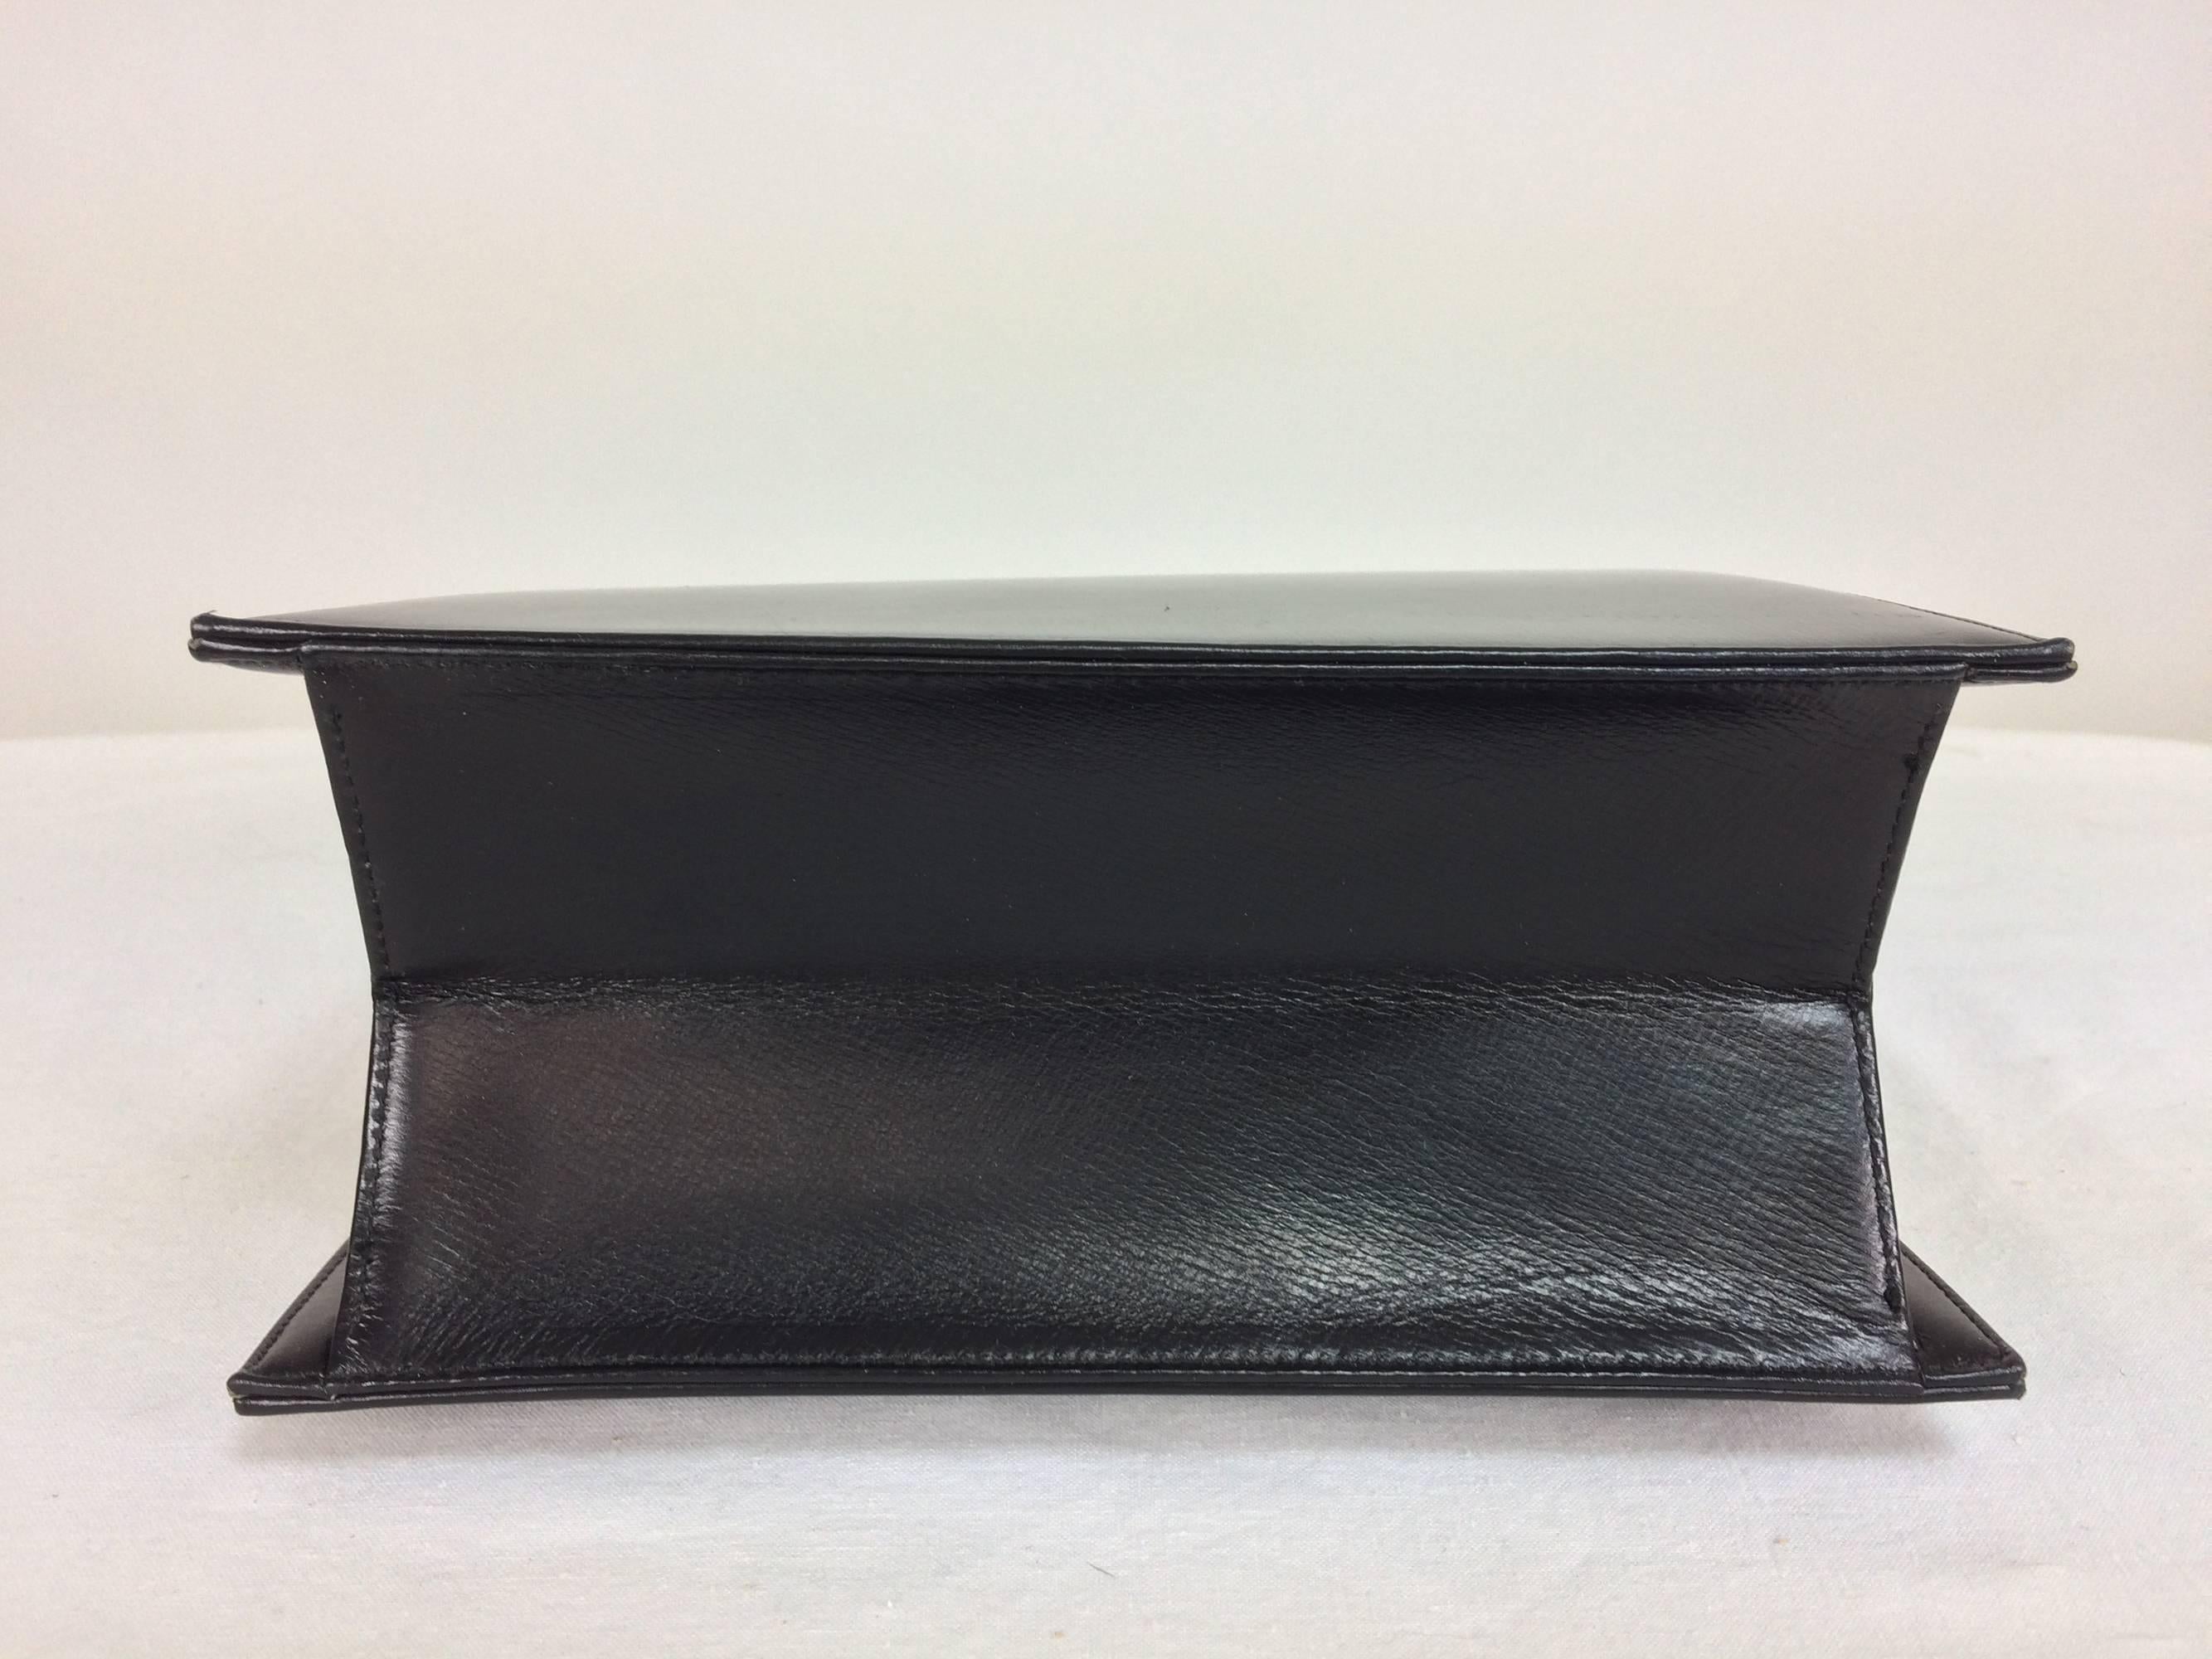 Bienen-Davis glazed black calf tall and narrow handbag 1950s 1